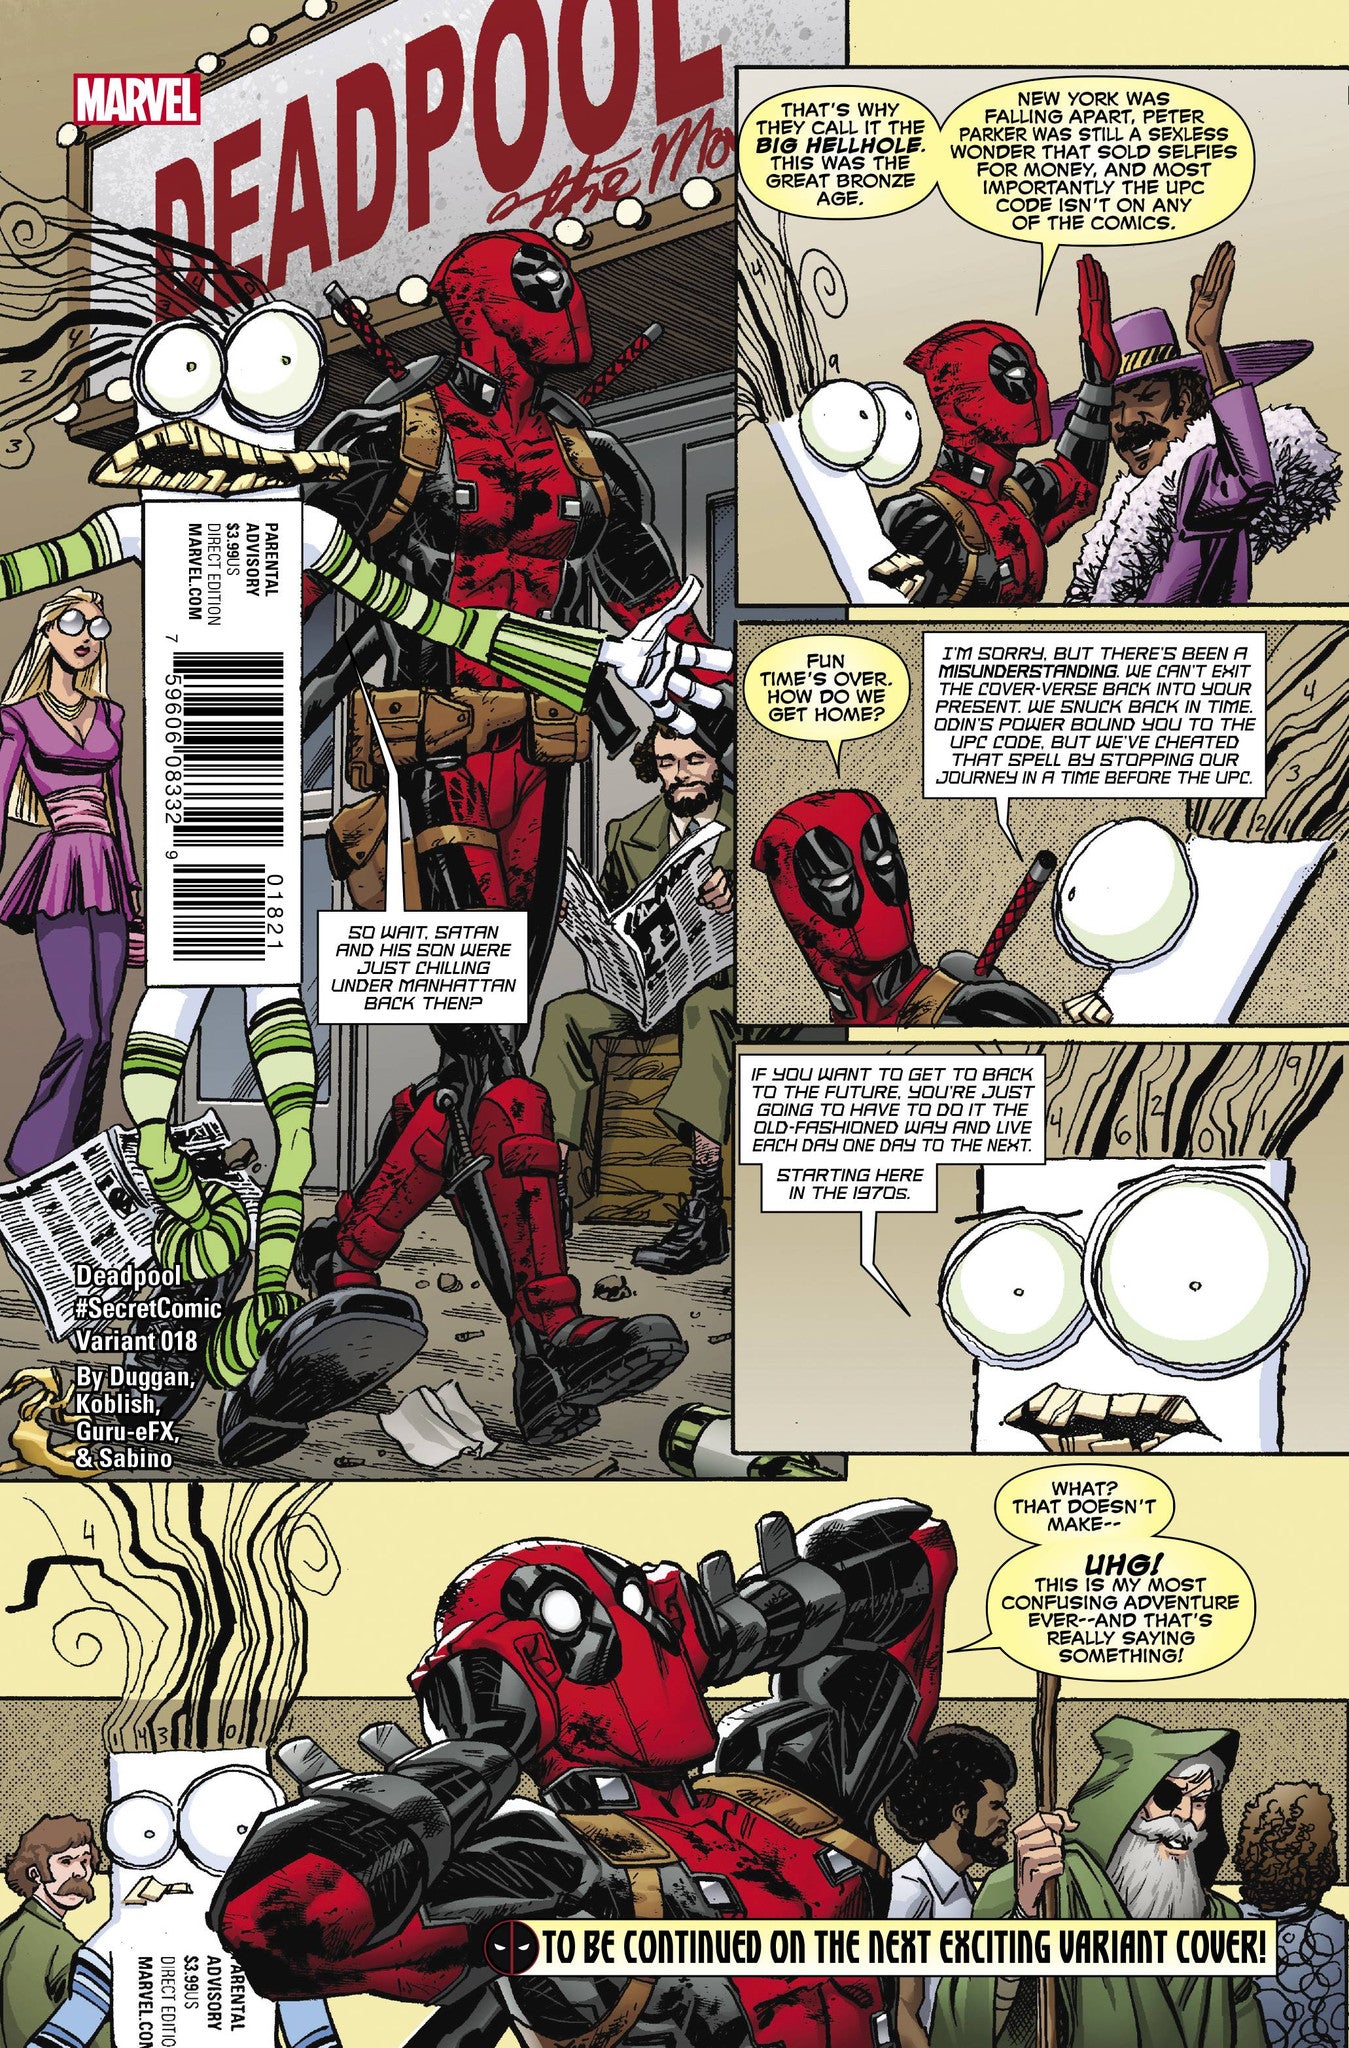 Deadpool (2016) #18 "Secret Comic" Variant